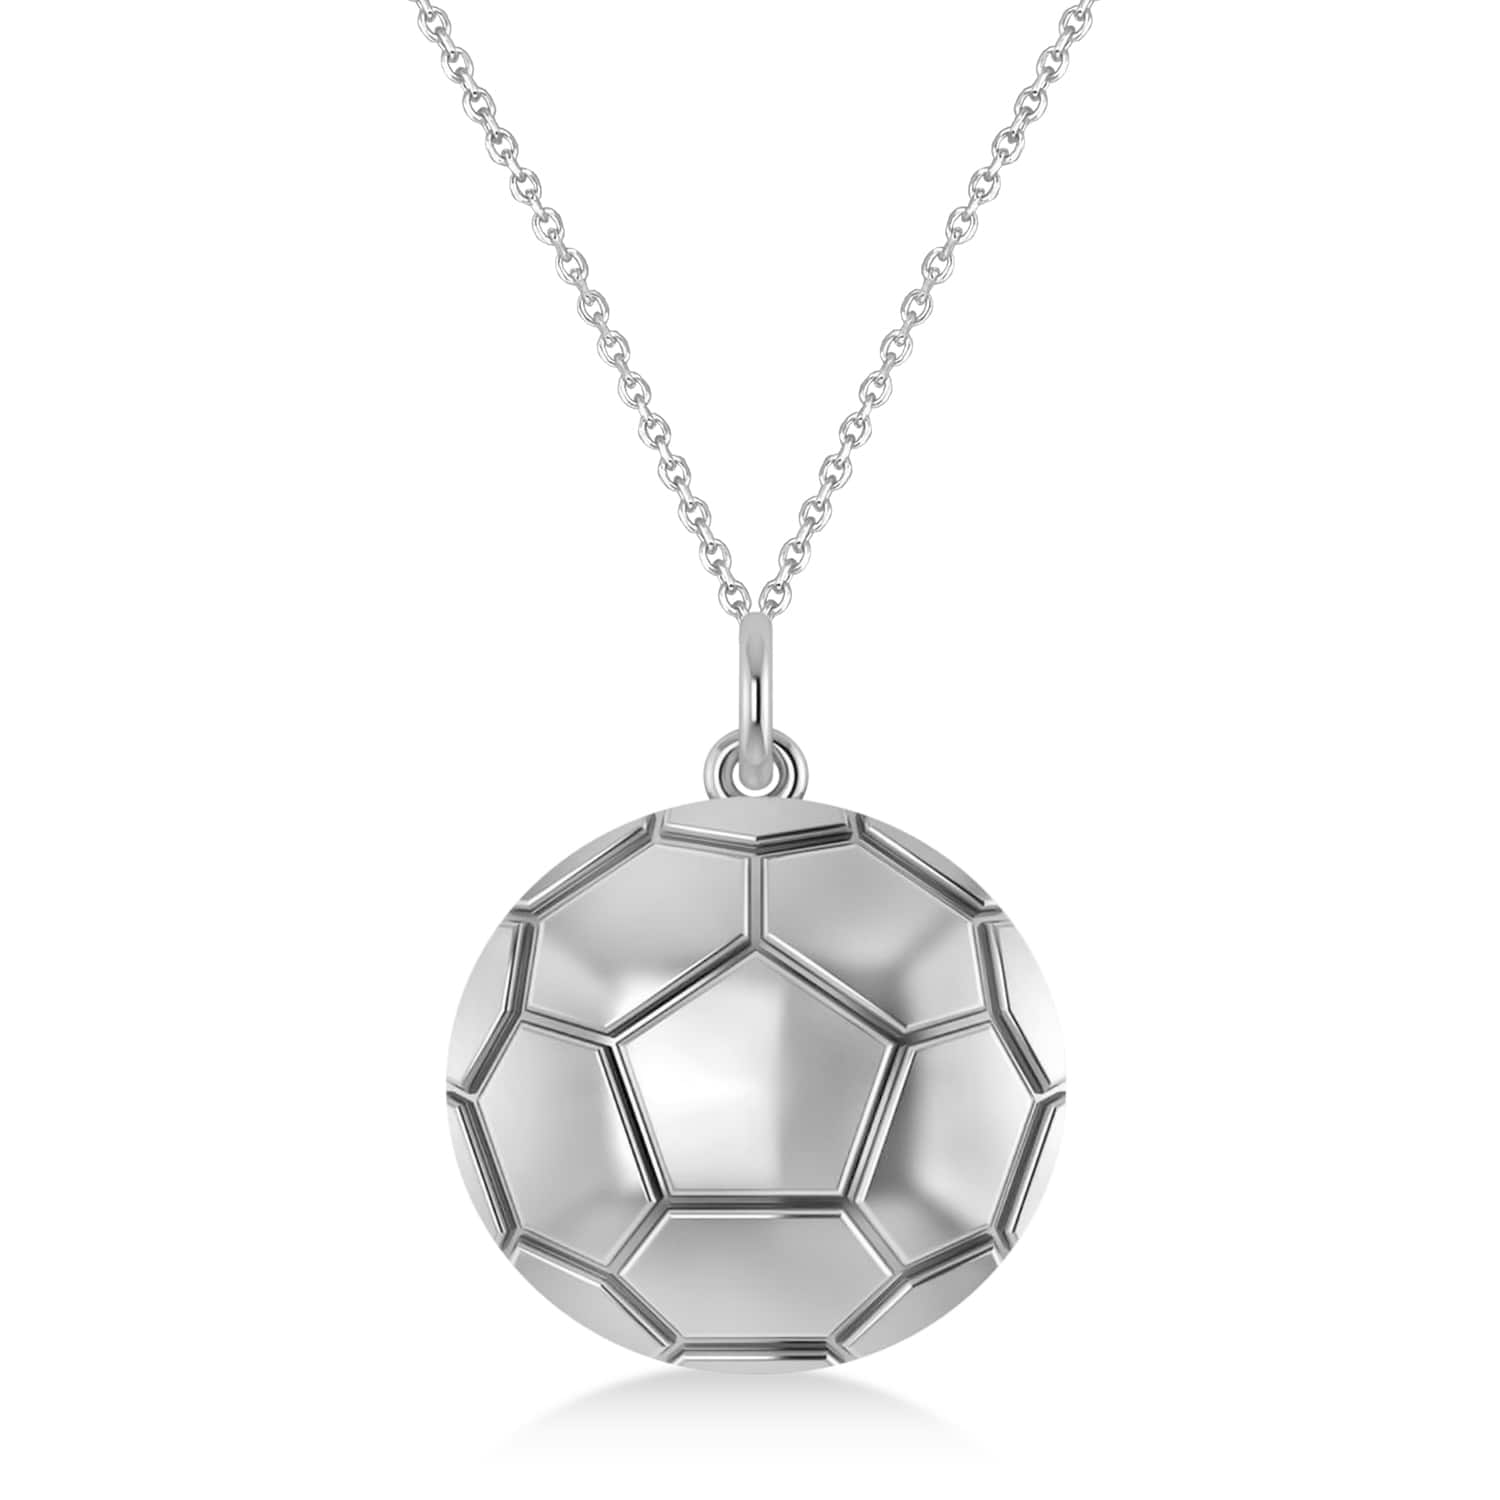 Soccer Ball Pendant Necklace | Soccer Stuff & More